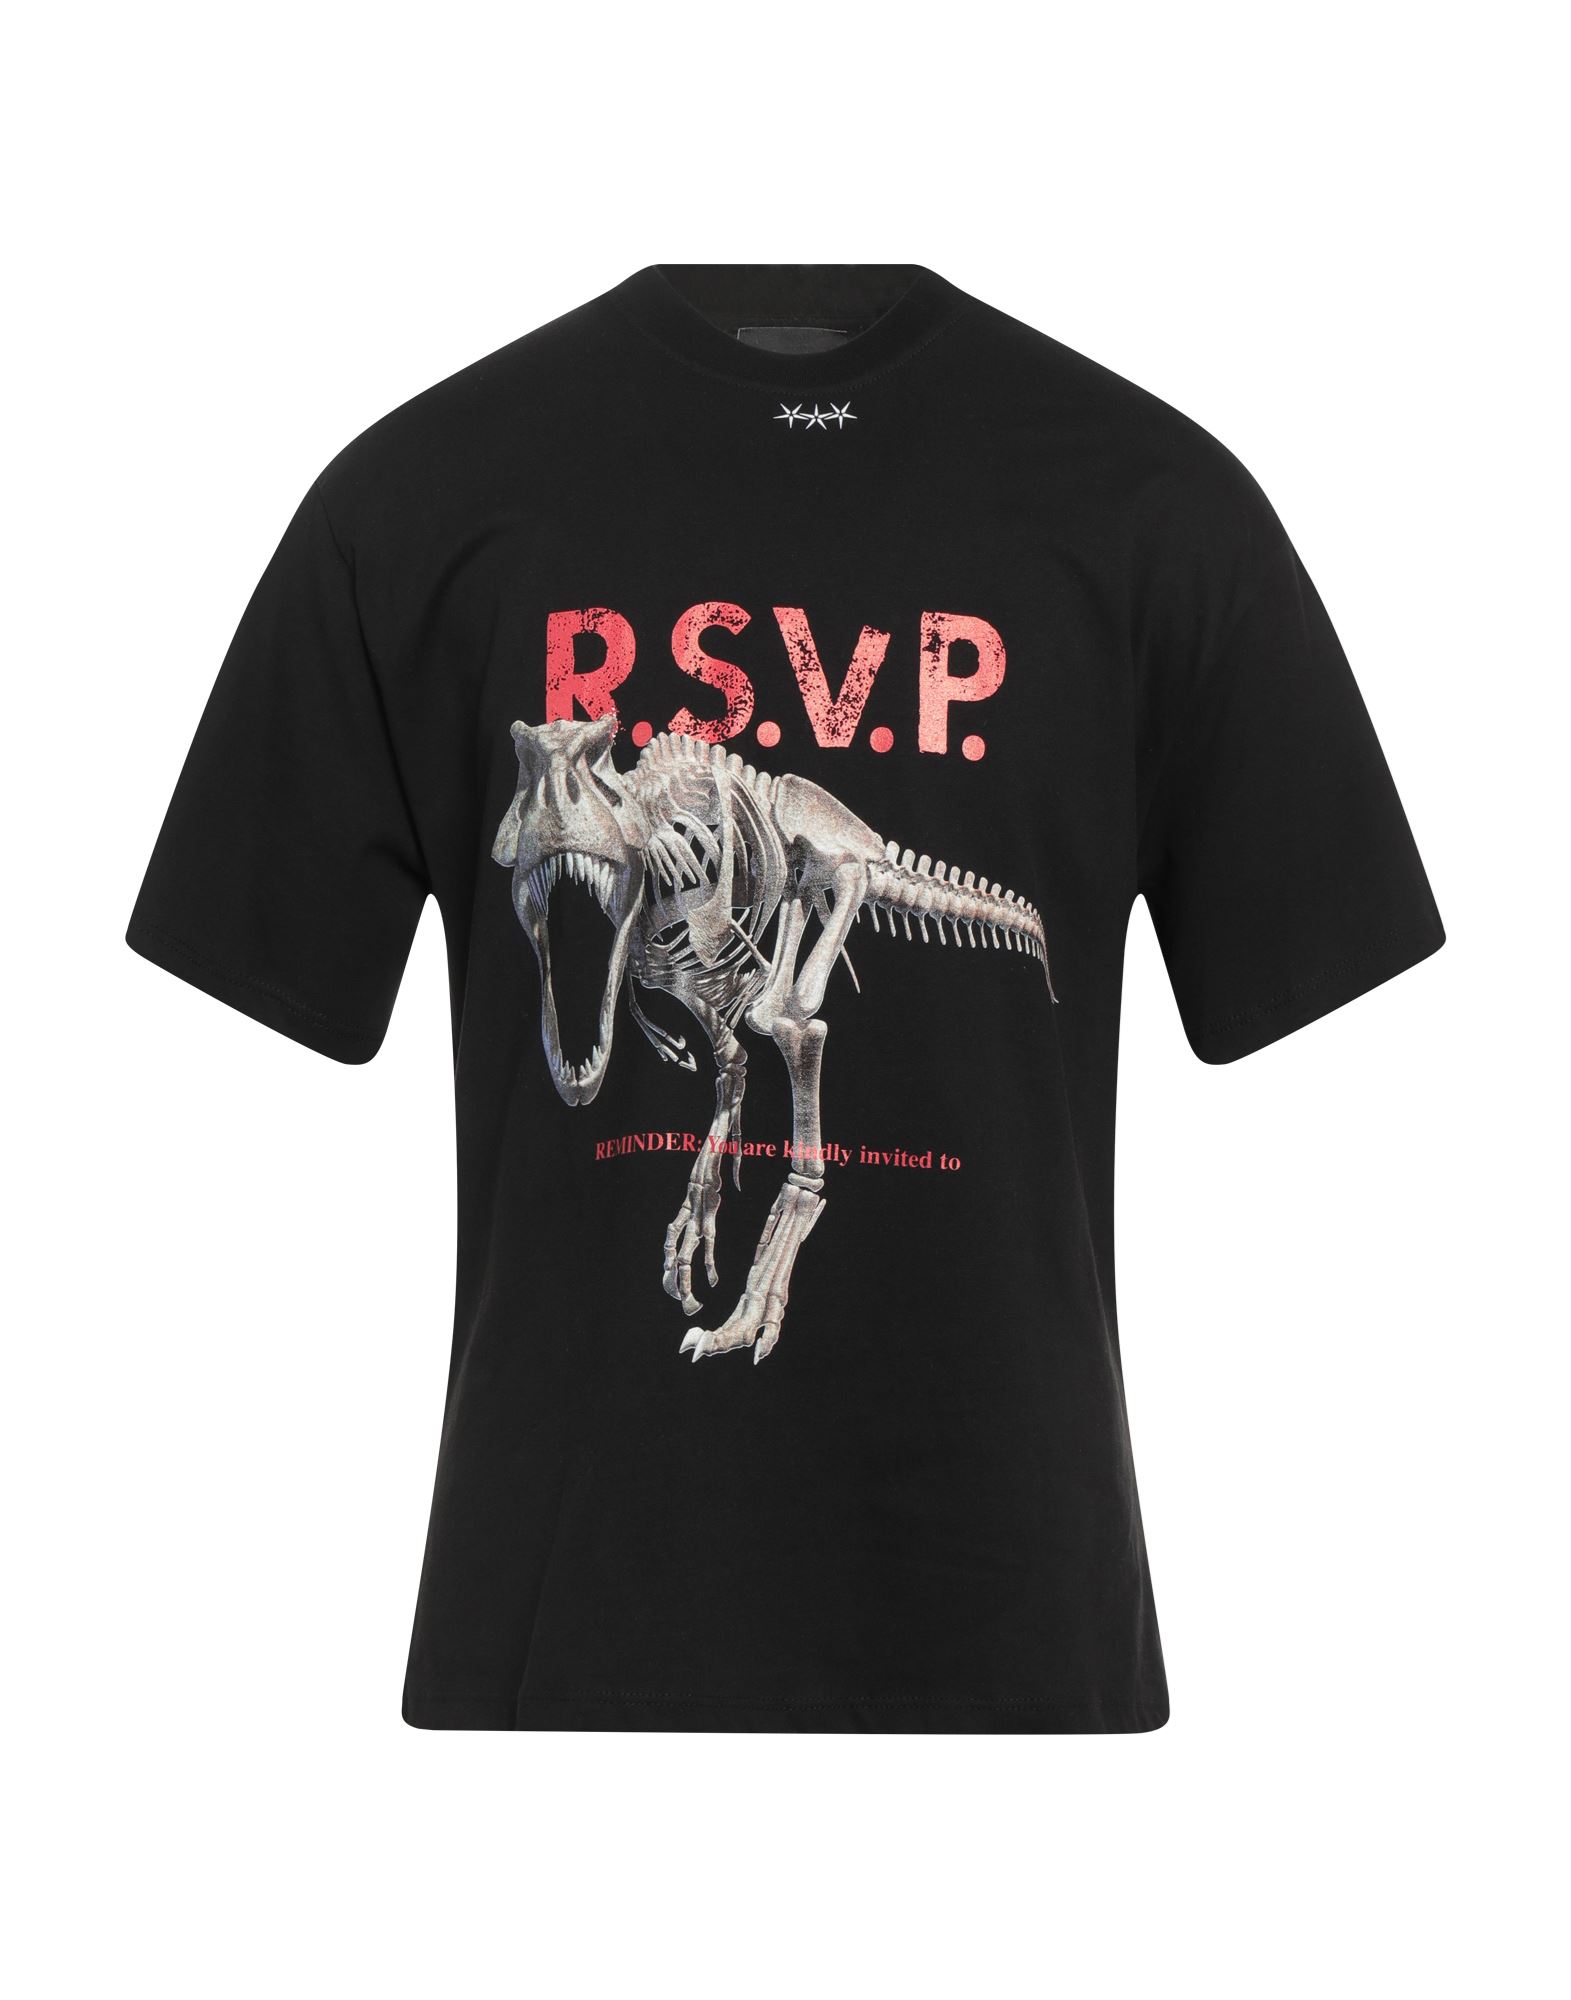 Revenant Rv Nt T-shirts In Black